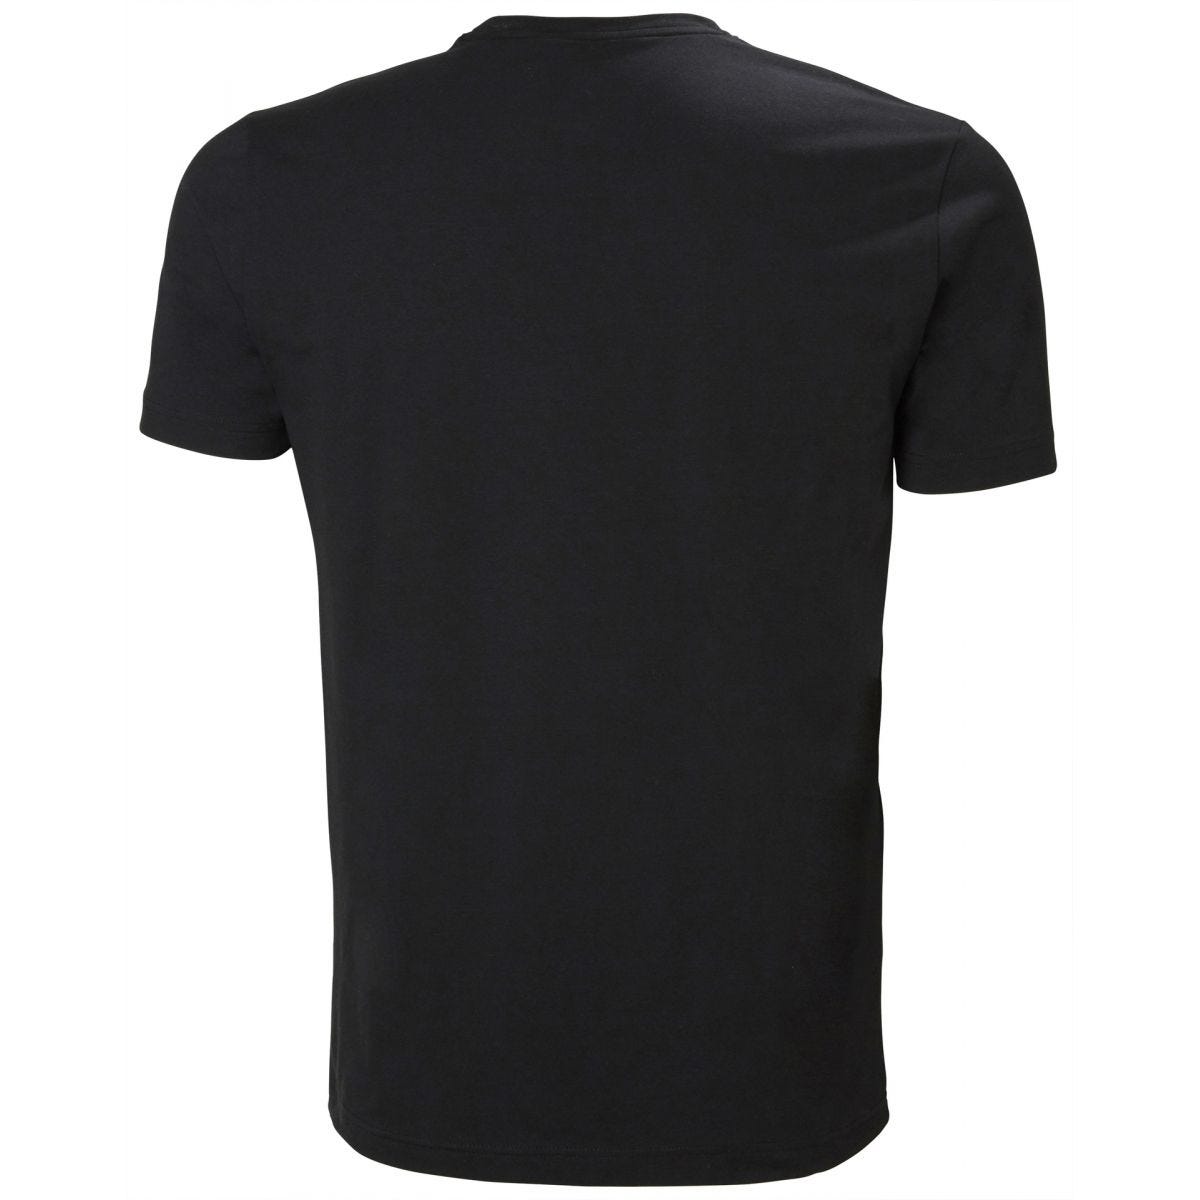 Tee-shirt Kensington Noir - Helly Hansen - Taille L 1